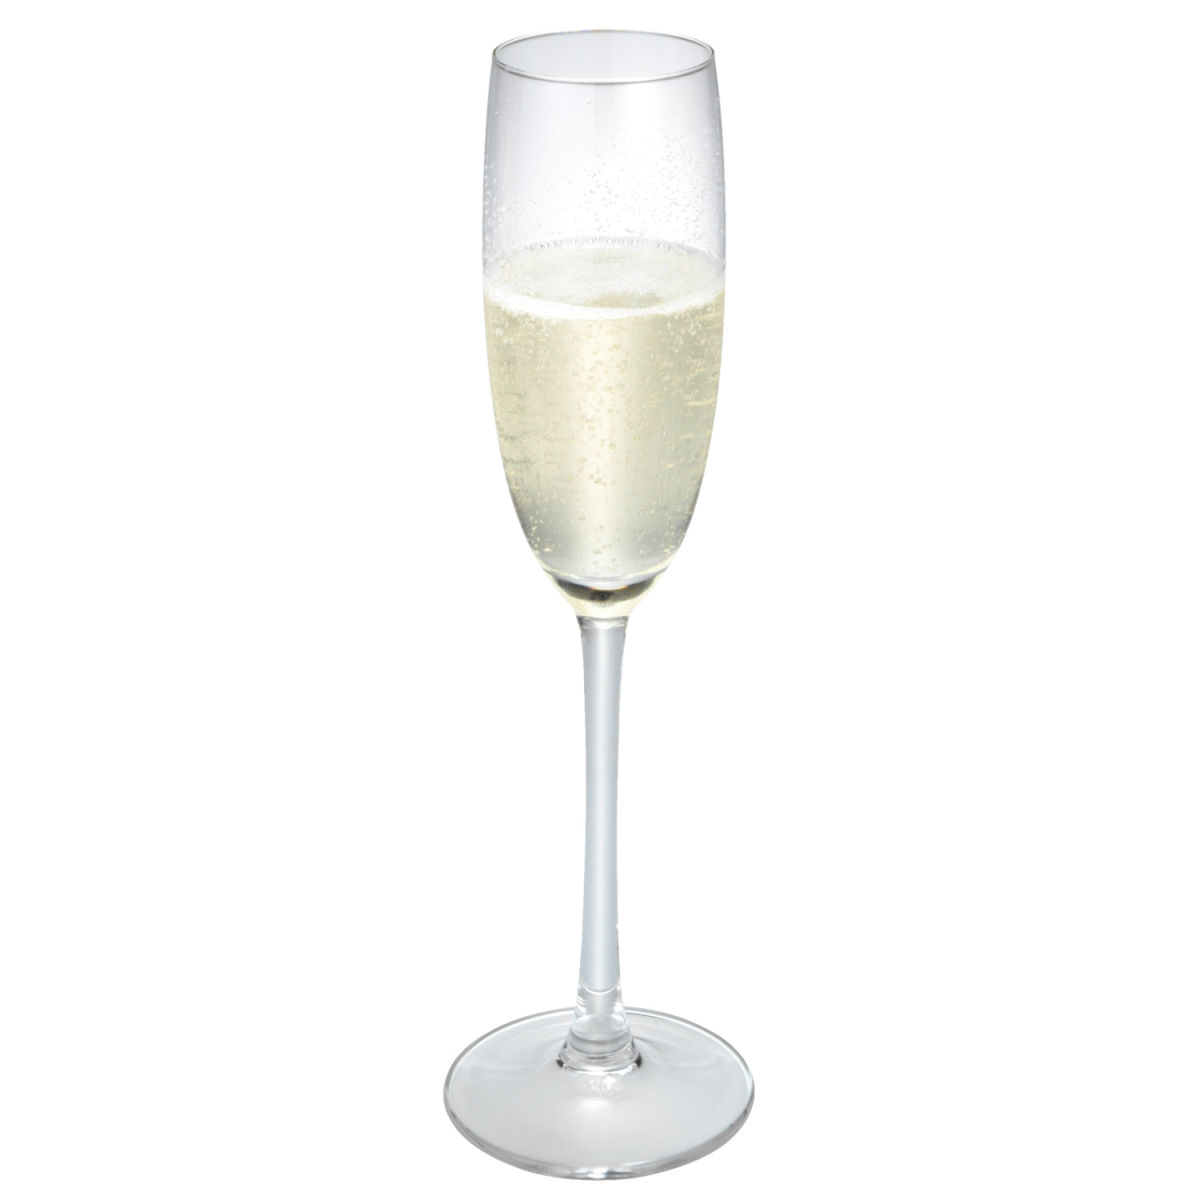 Royal leerdam Champagneglas Plaza met vulstreepje; 200ml, 6x5.2x23 cm (ØxØxH); transparant; 0.1 l vulstreepje, 6 stuk / verpakking